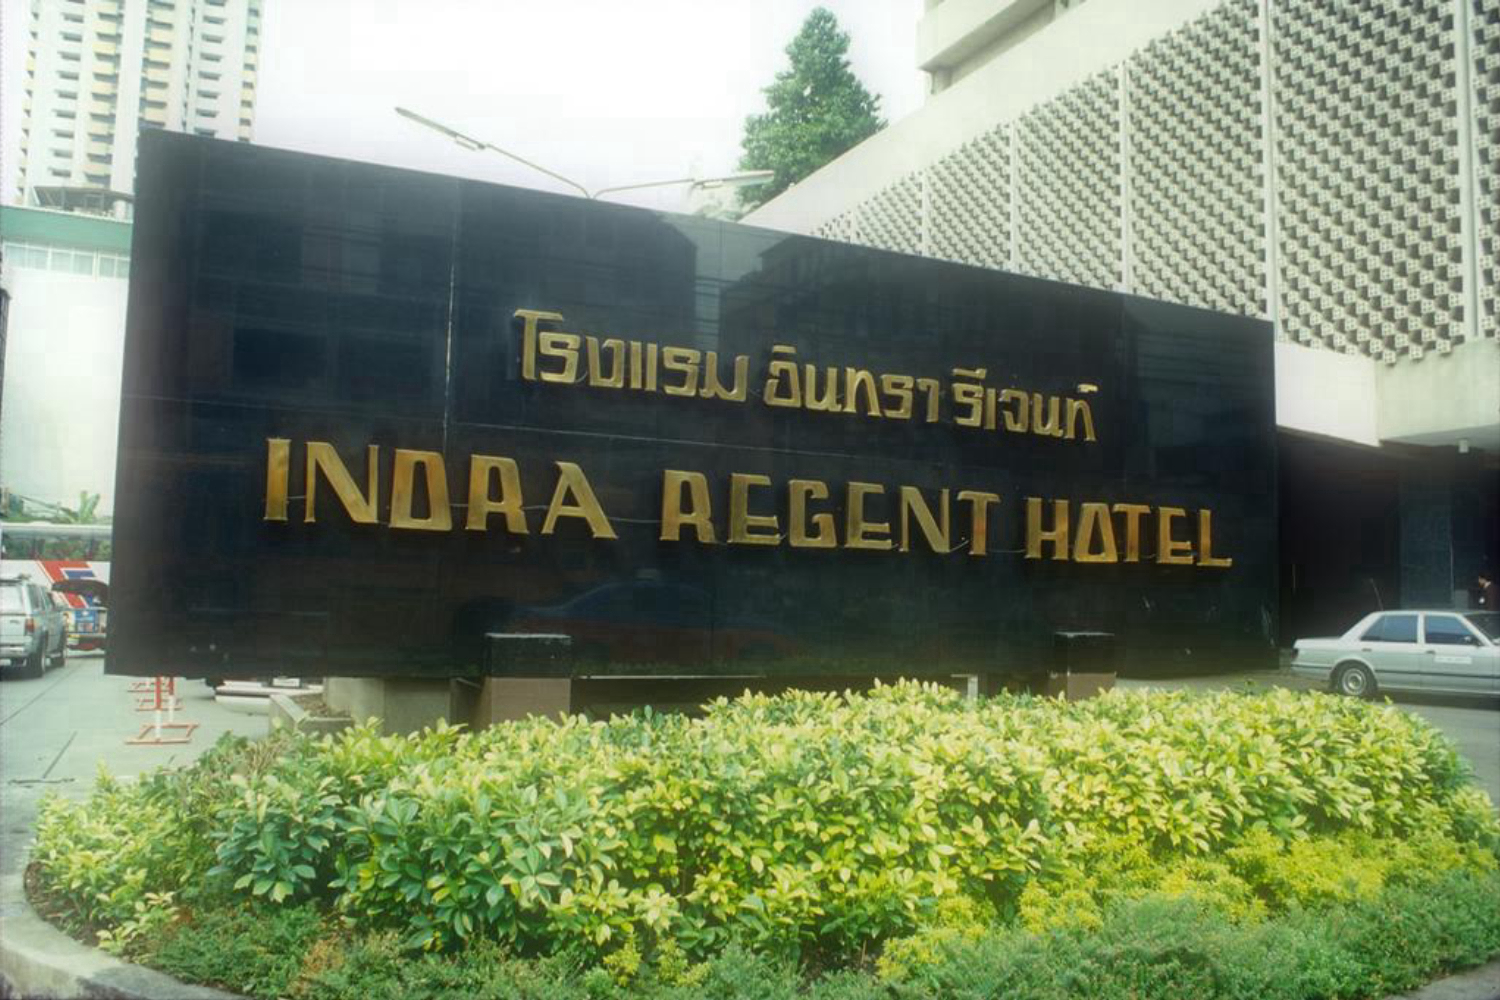 Indra Regent Hotel - Image 1